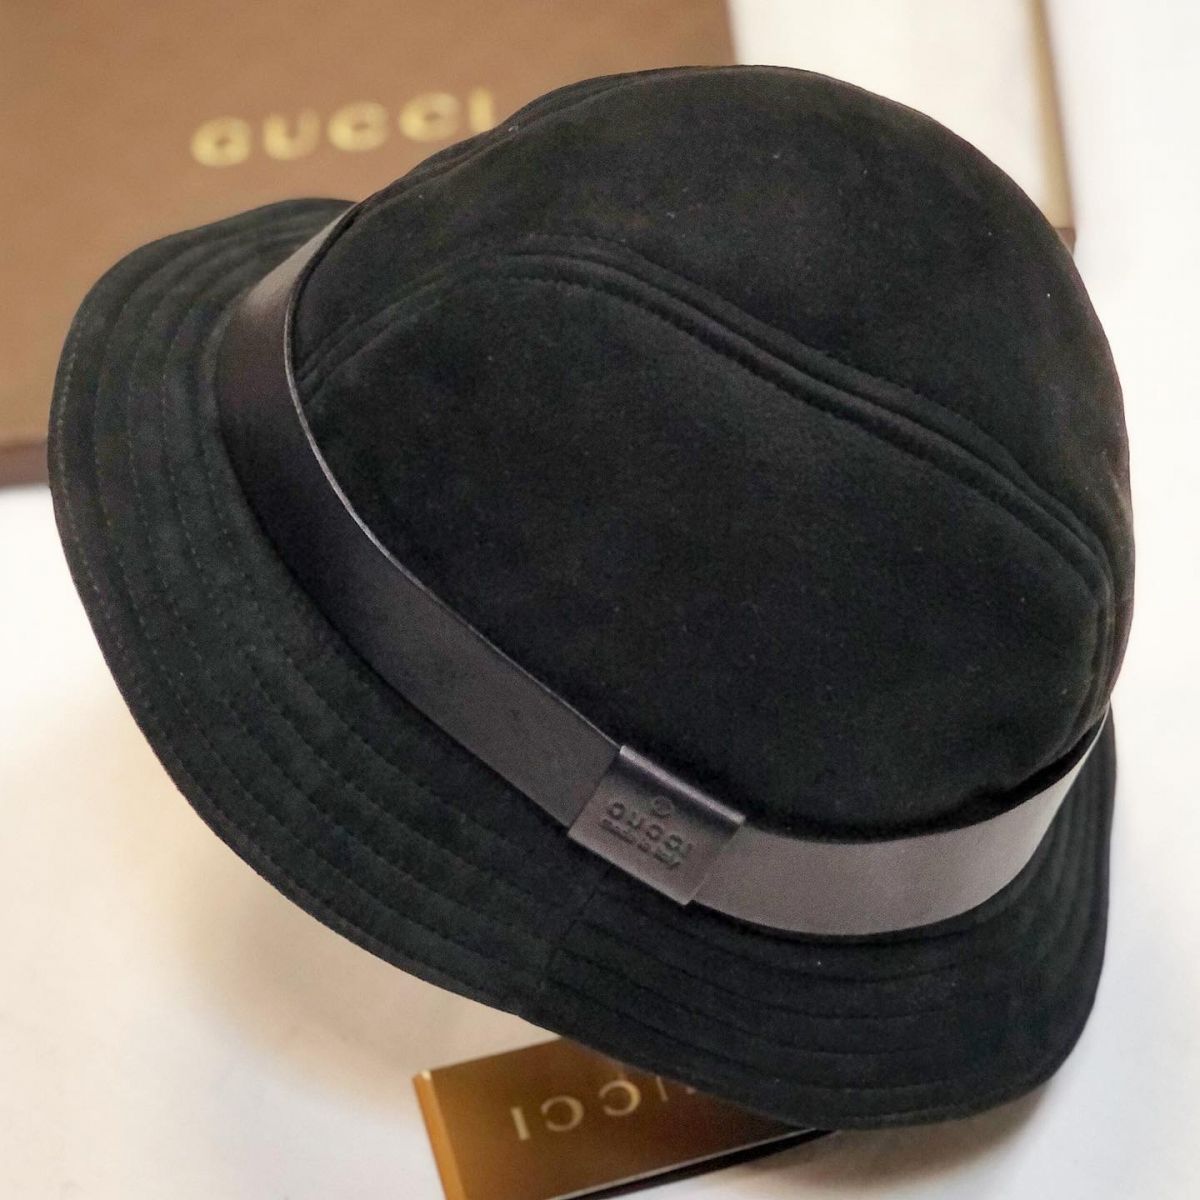 Шляпа / на меху / Gucci  размер L цена 15 385 руб / новая с бирками / 